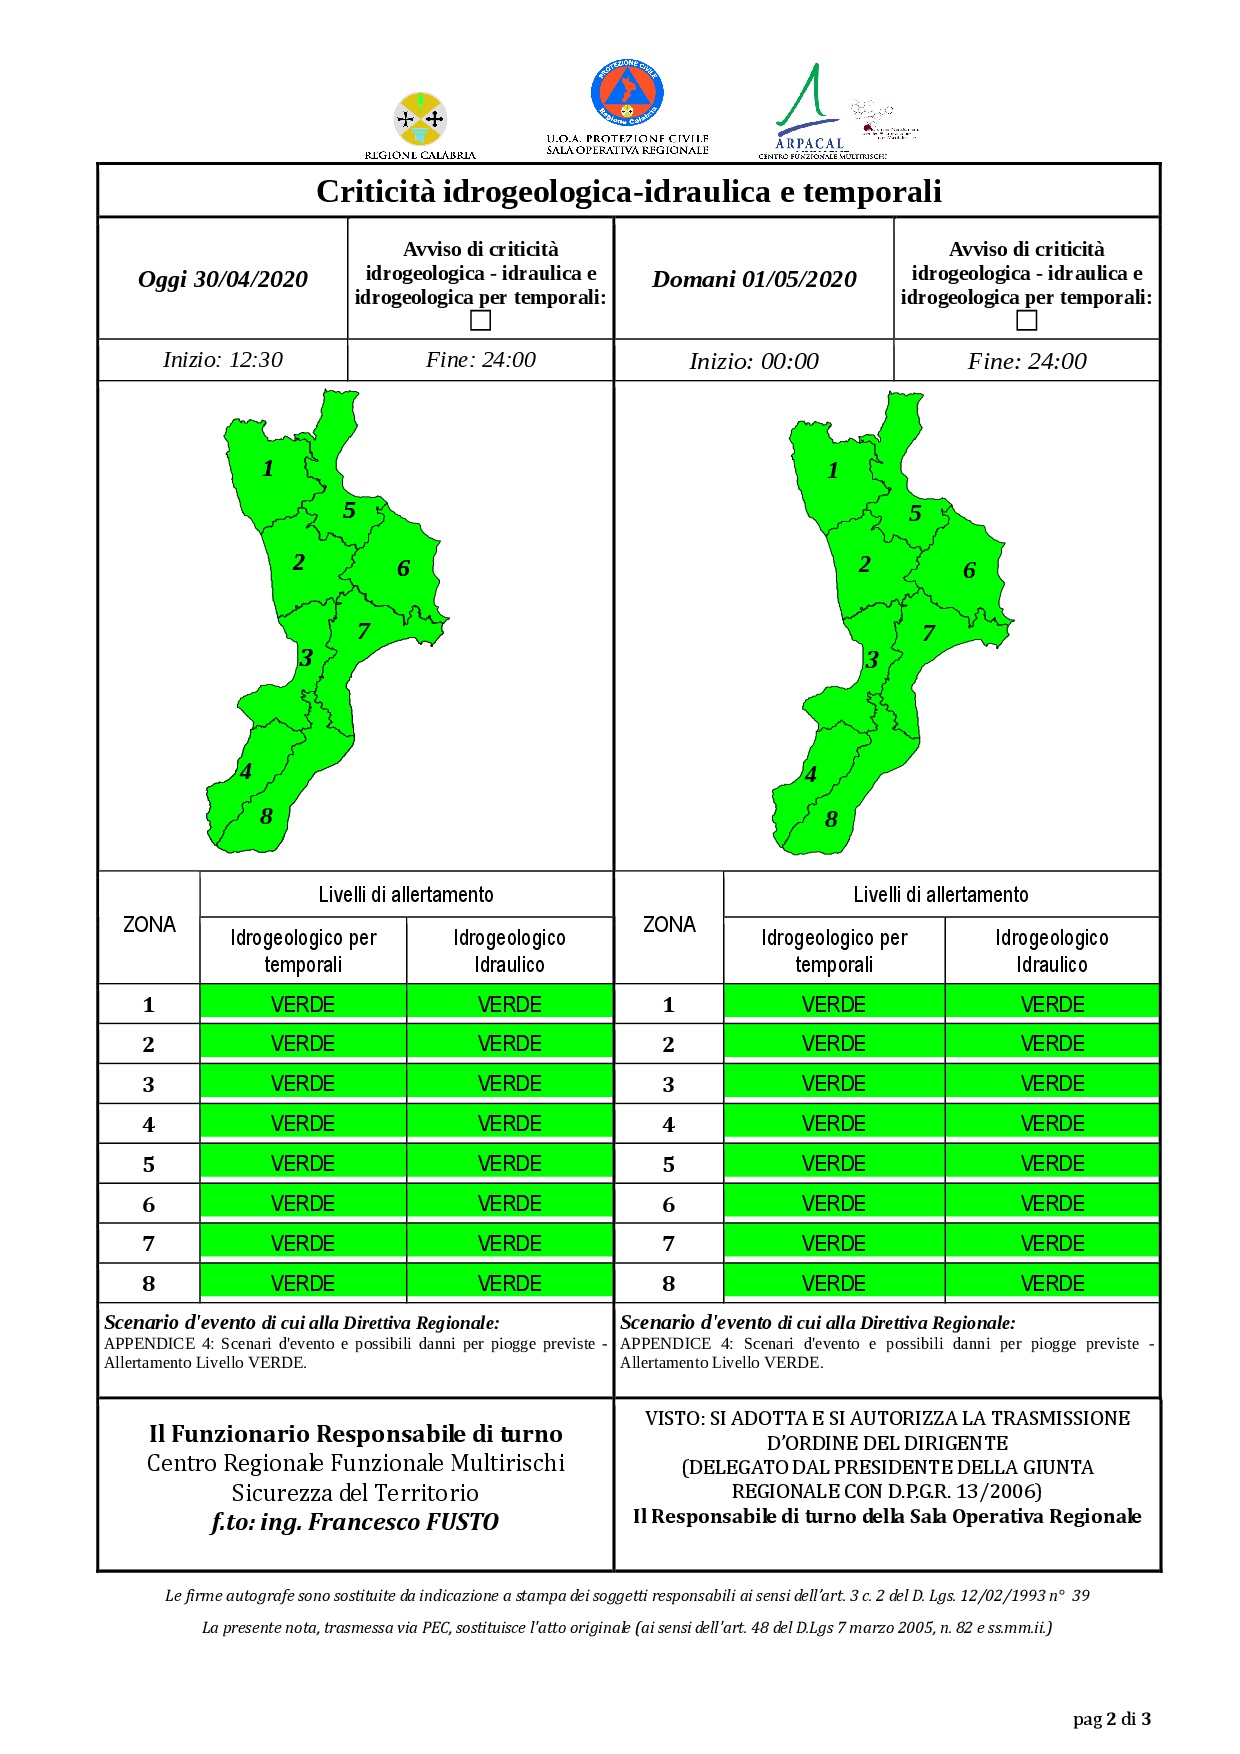 Criticità idrogeologica-idraulica e temporali in Calabria 30-04-2020